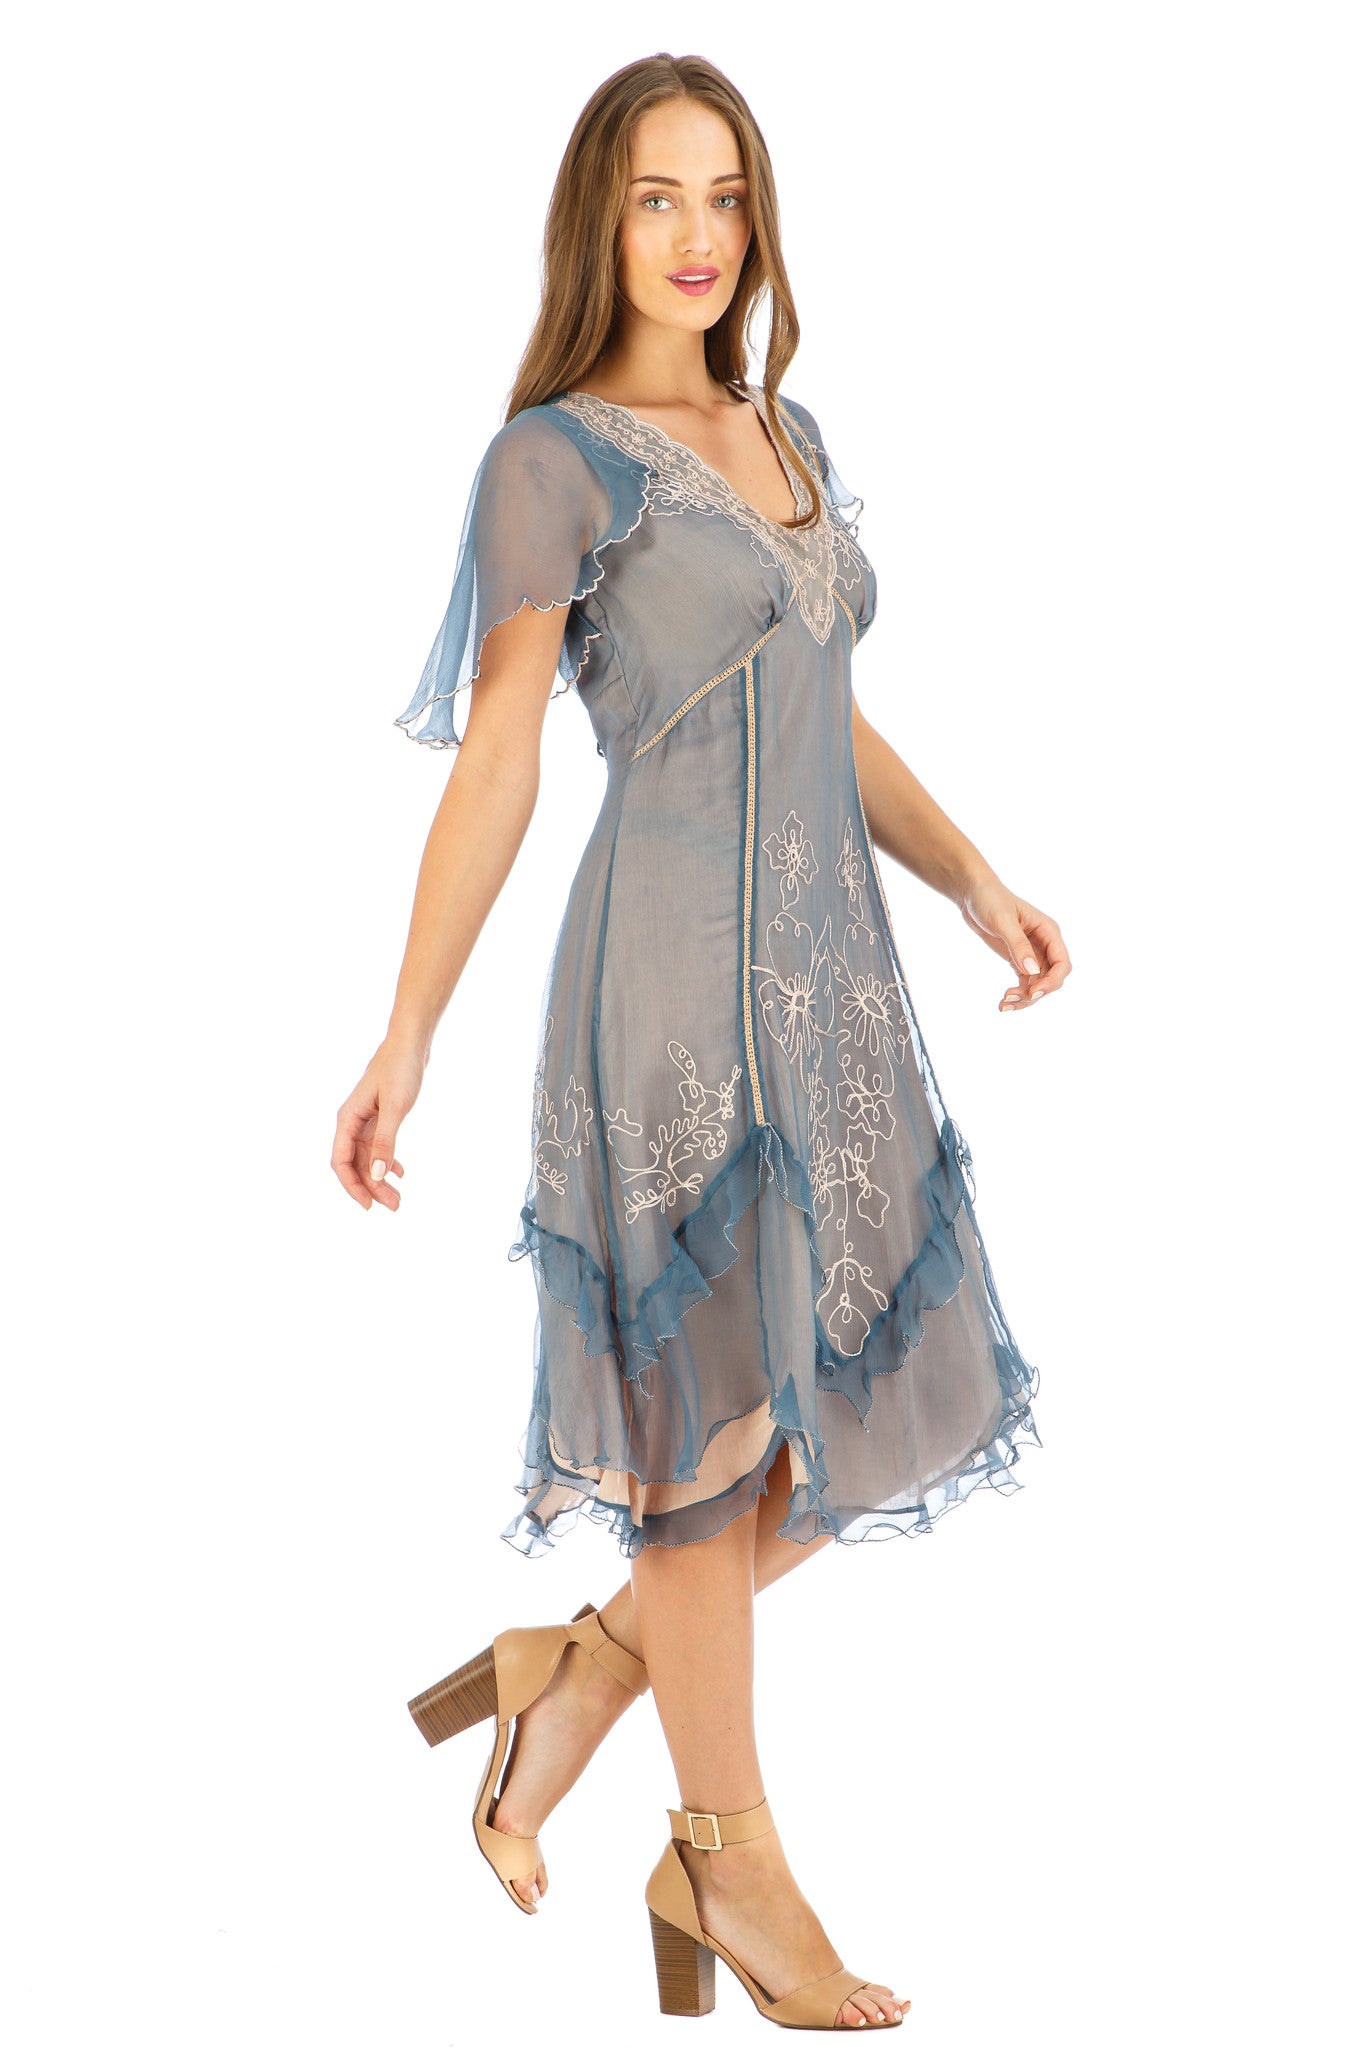 Nataya Jacqueline AL-241 Sapphire Dress - SOLD OUT